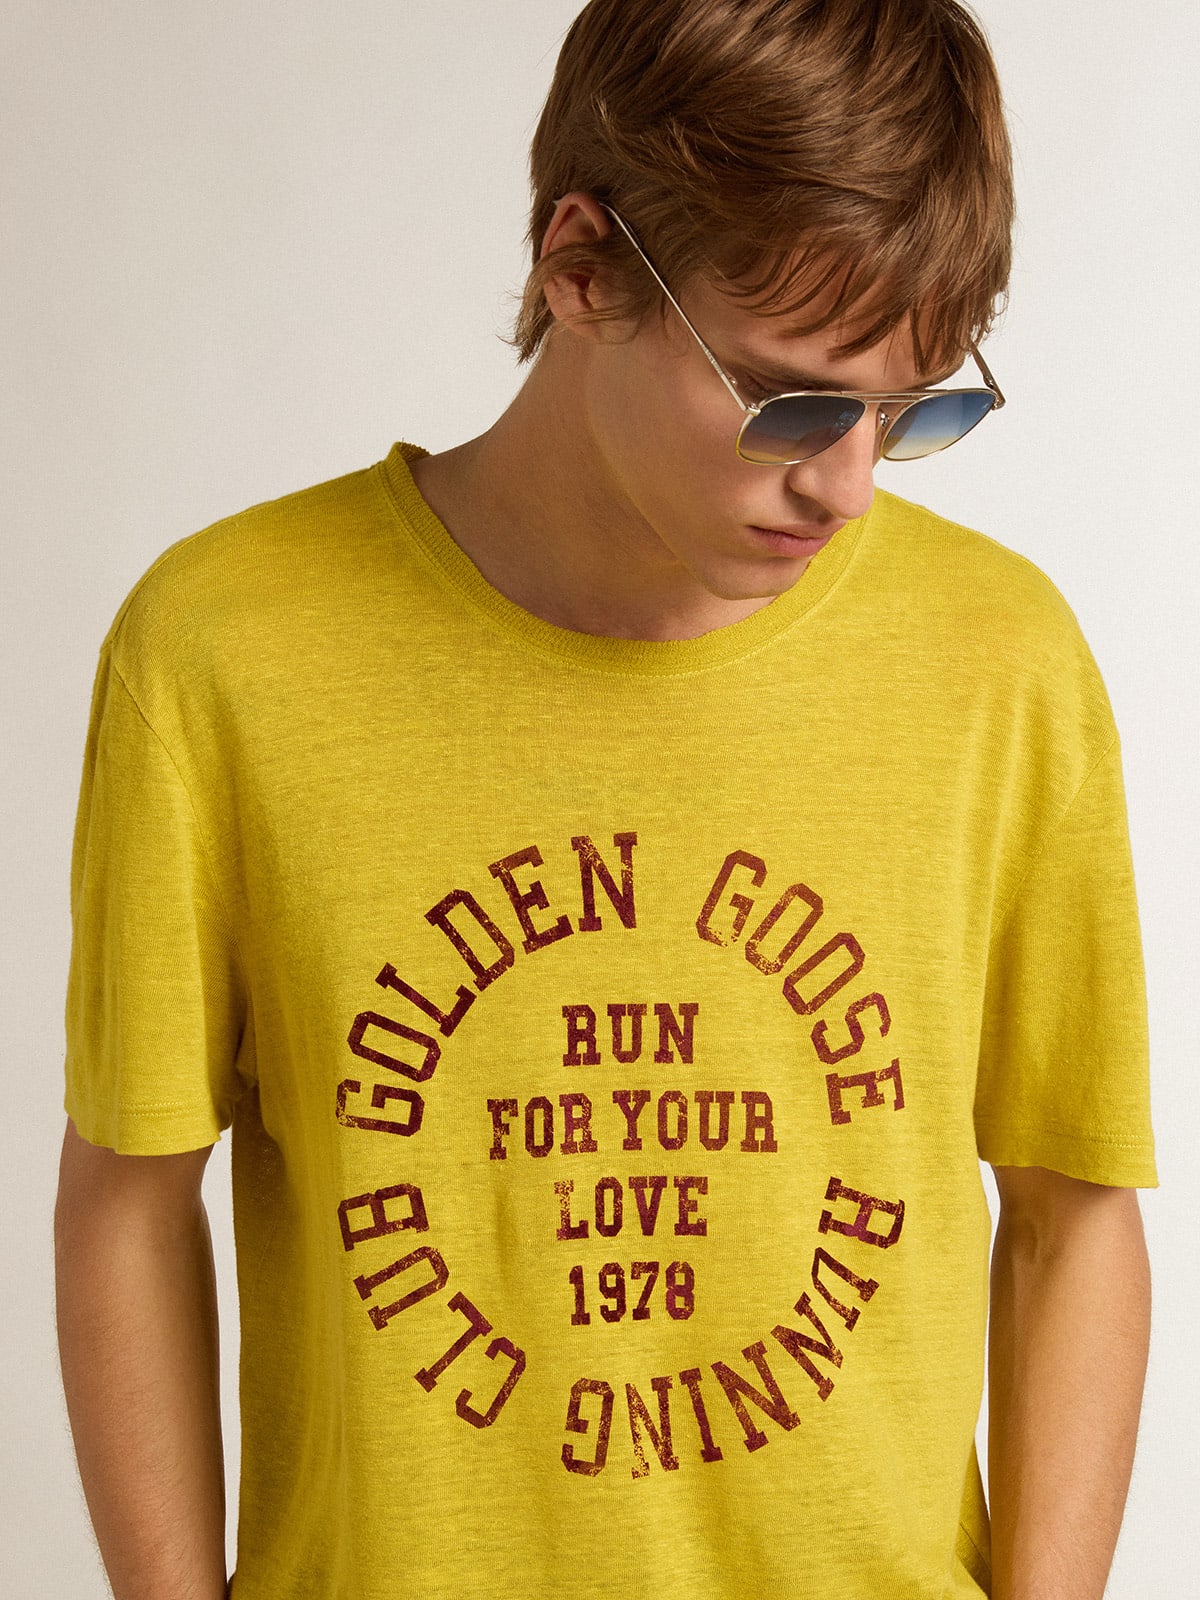 Golden Goose - T-shirt homme en lin jaune maïs in 